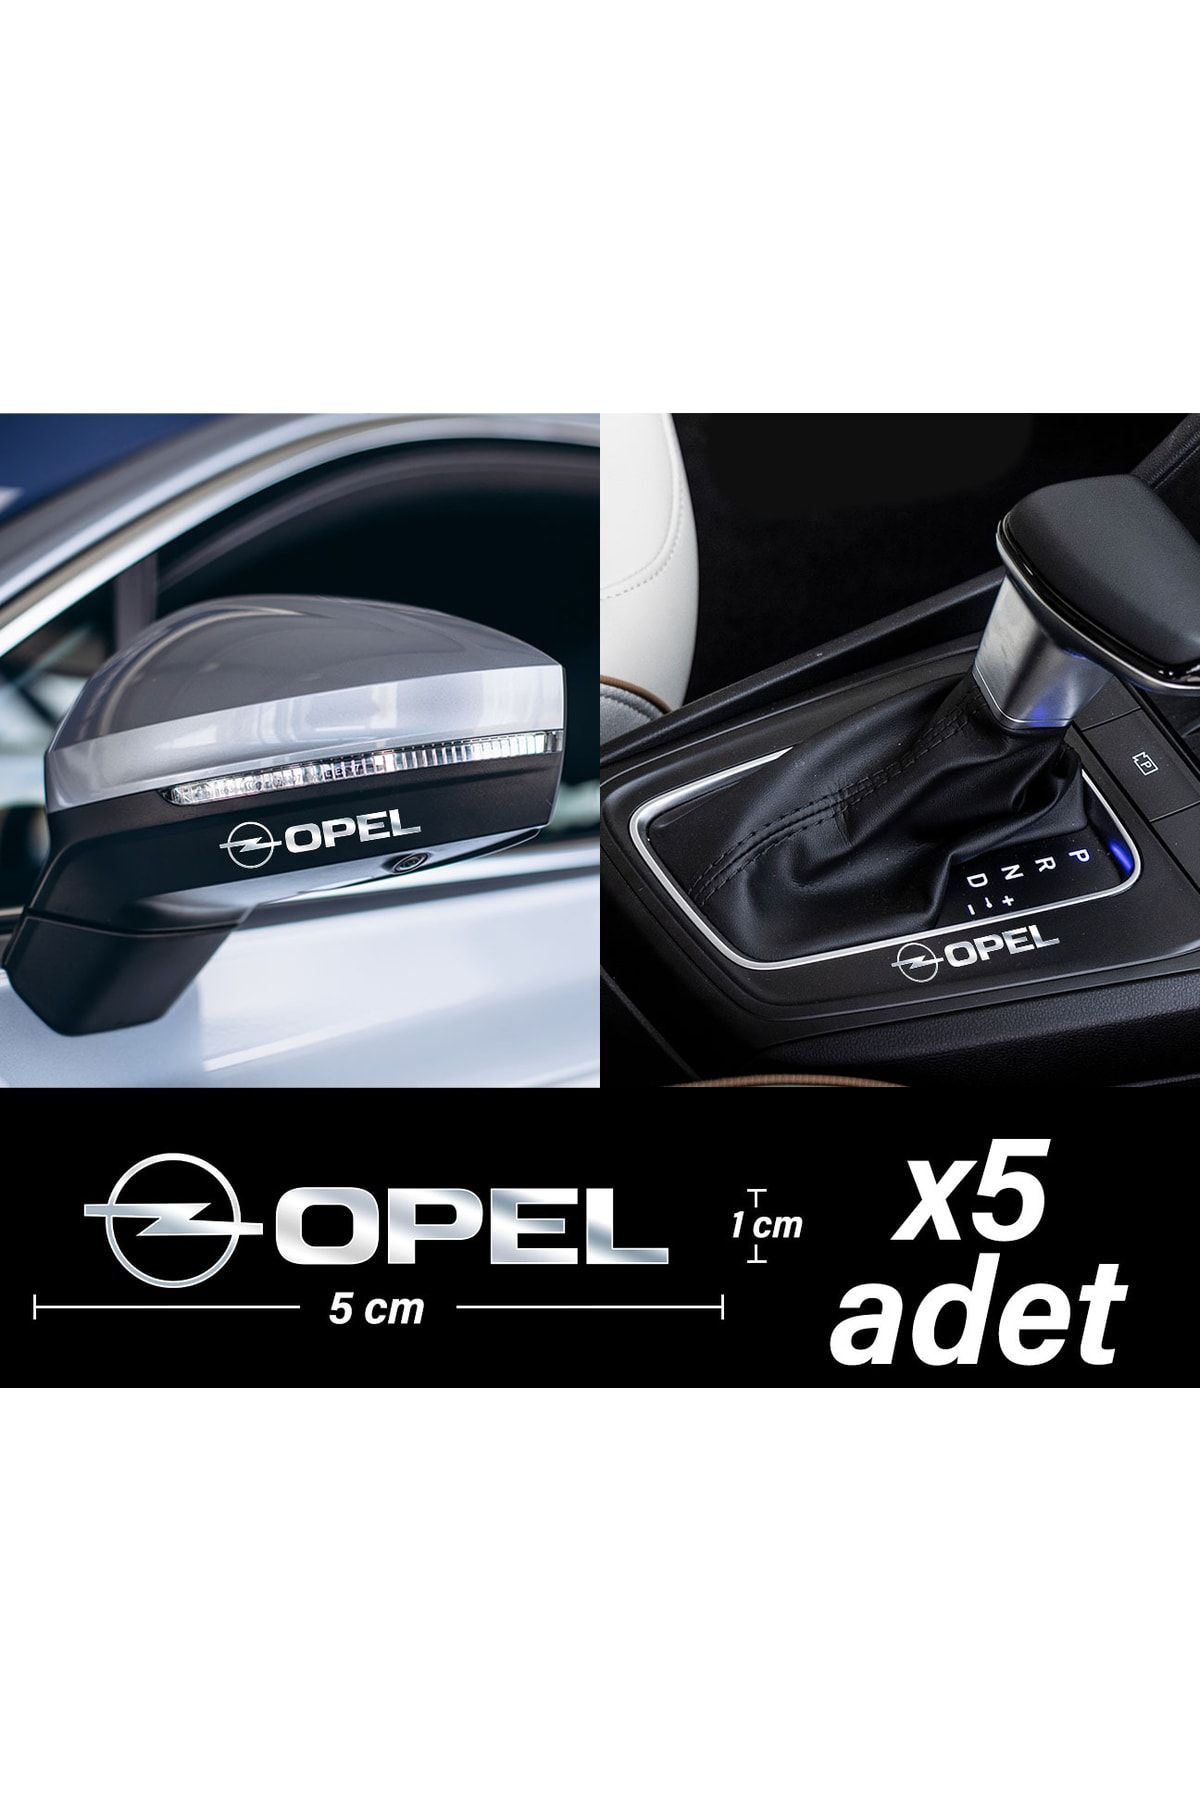 ÖZKAŞ Opel Için Metal Sticker 5 Adet Oto Aksesuar Oto Sticker Çıkartma Araba